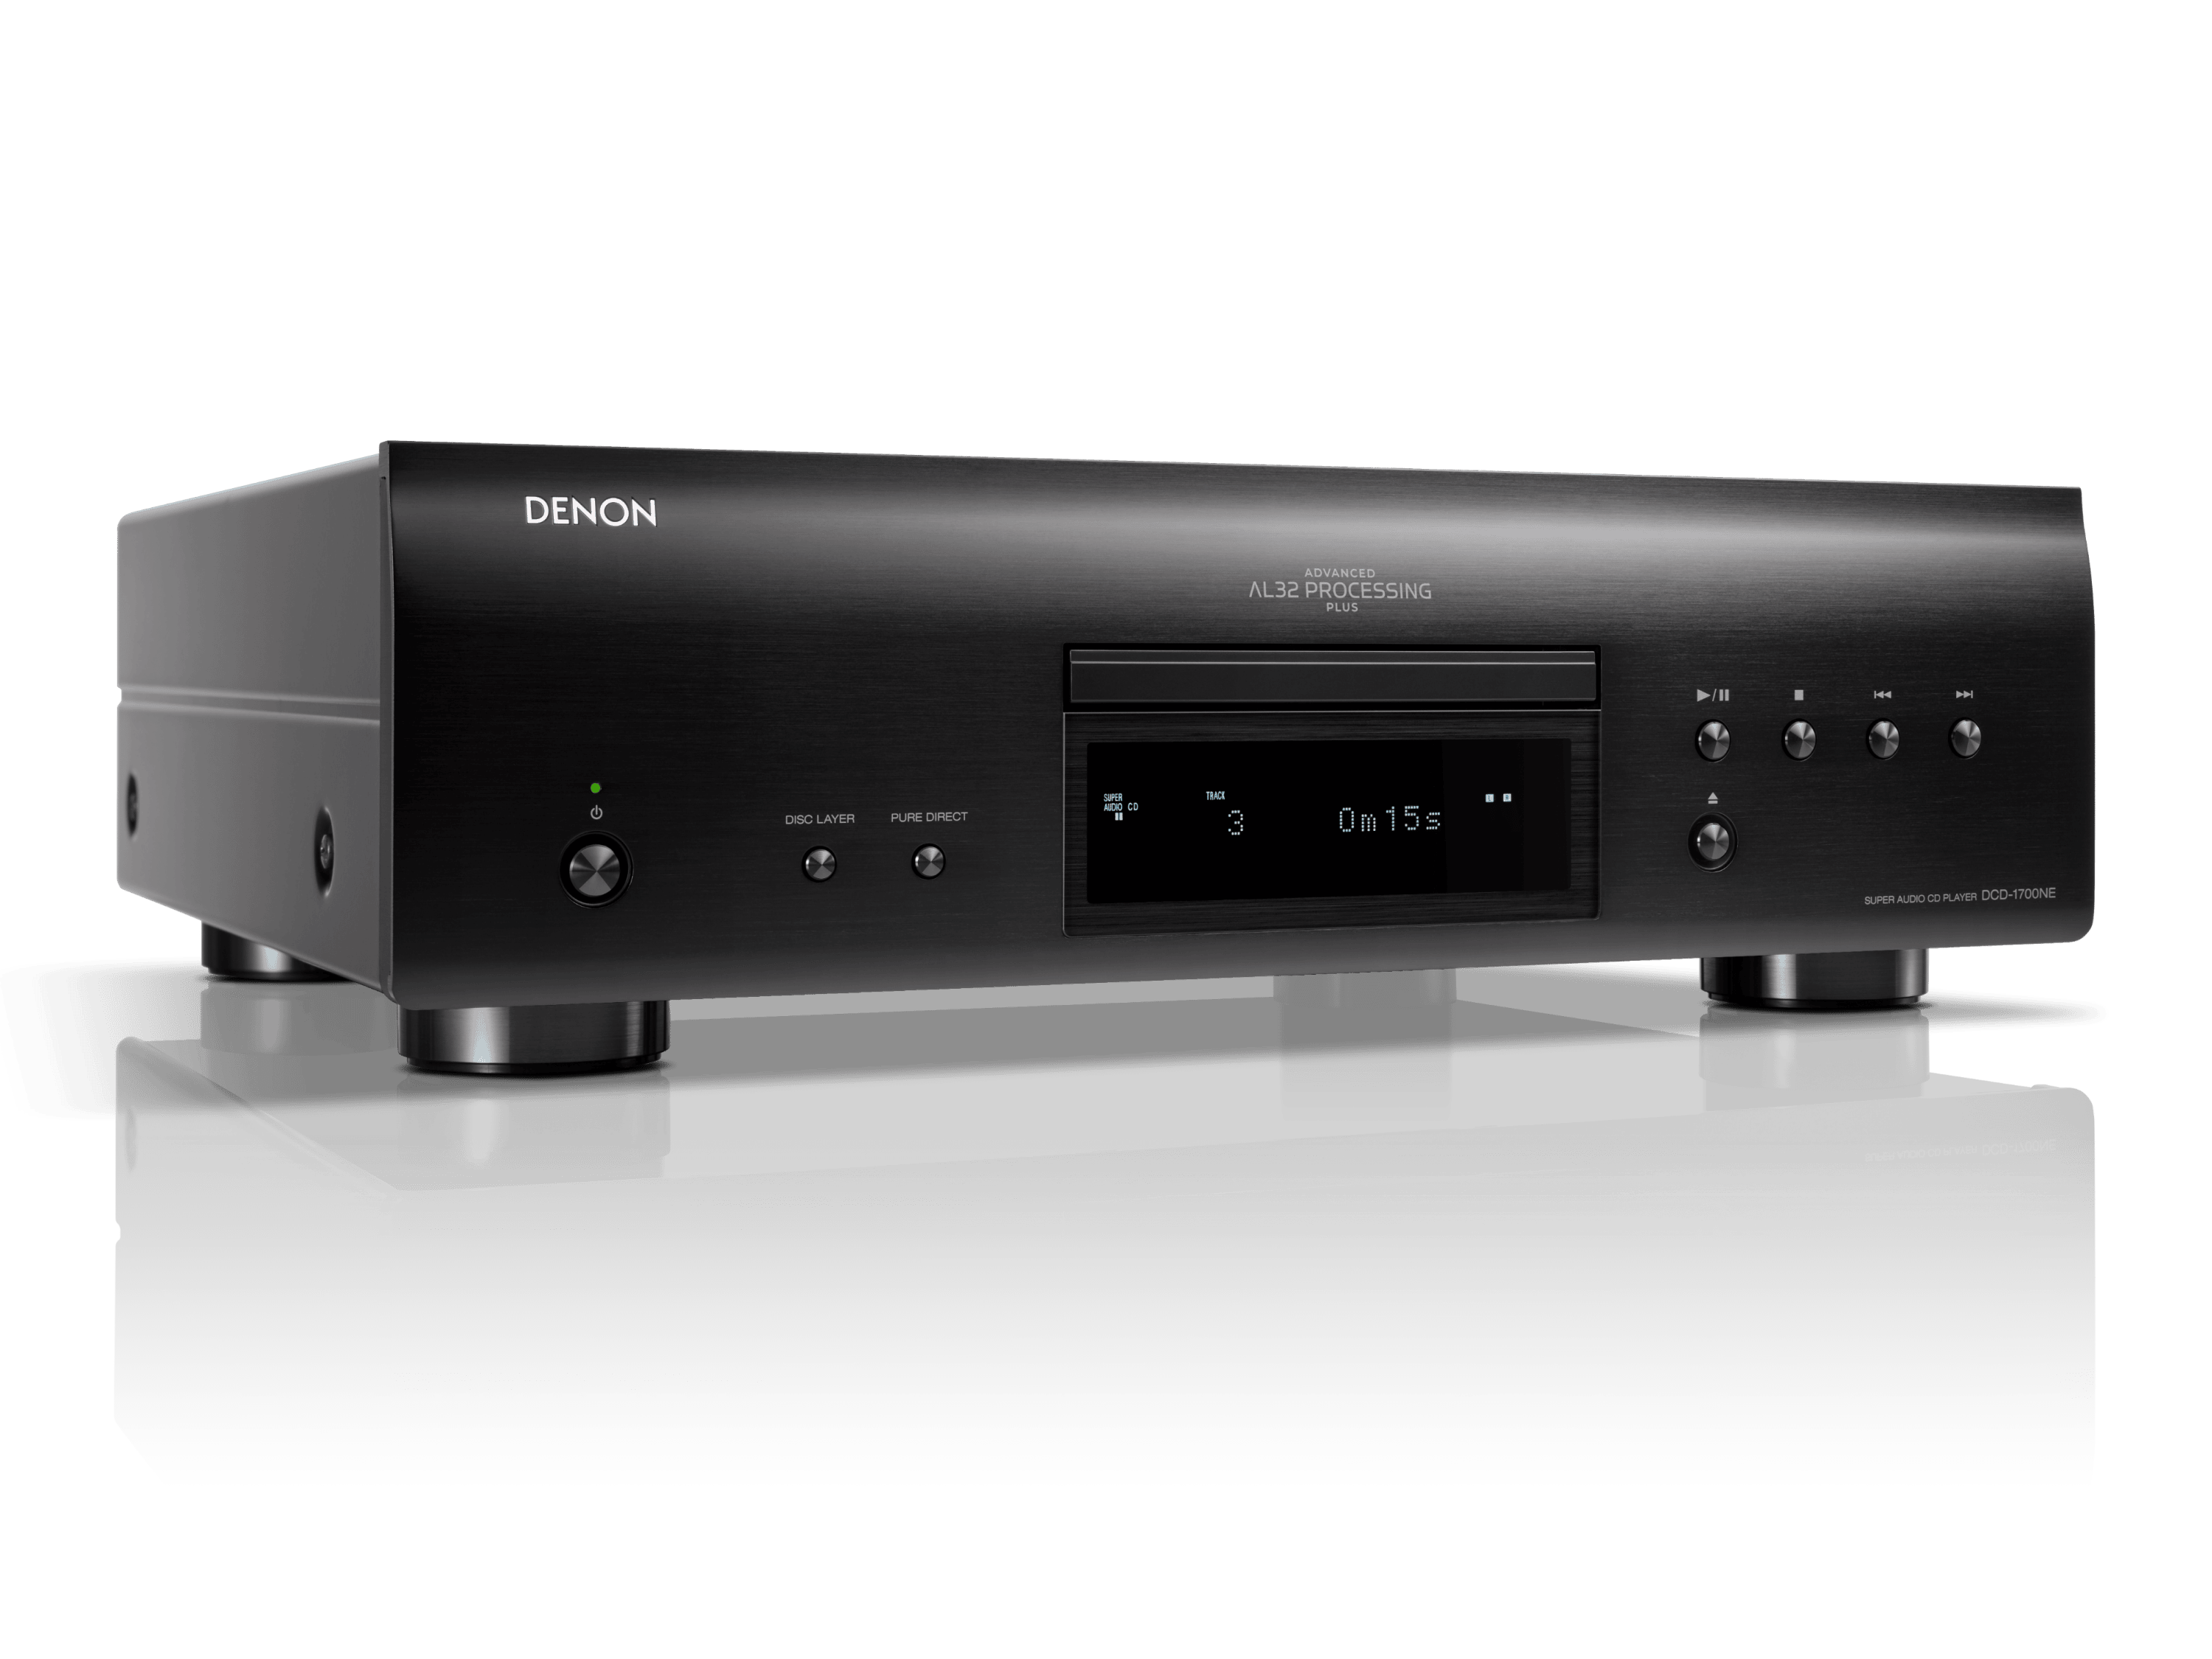 DCD-1700NE - CD/SACD-Player DCD-1700NE mit Advanced AL32 Processing Plus |  Denon - Europe | CD-Player